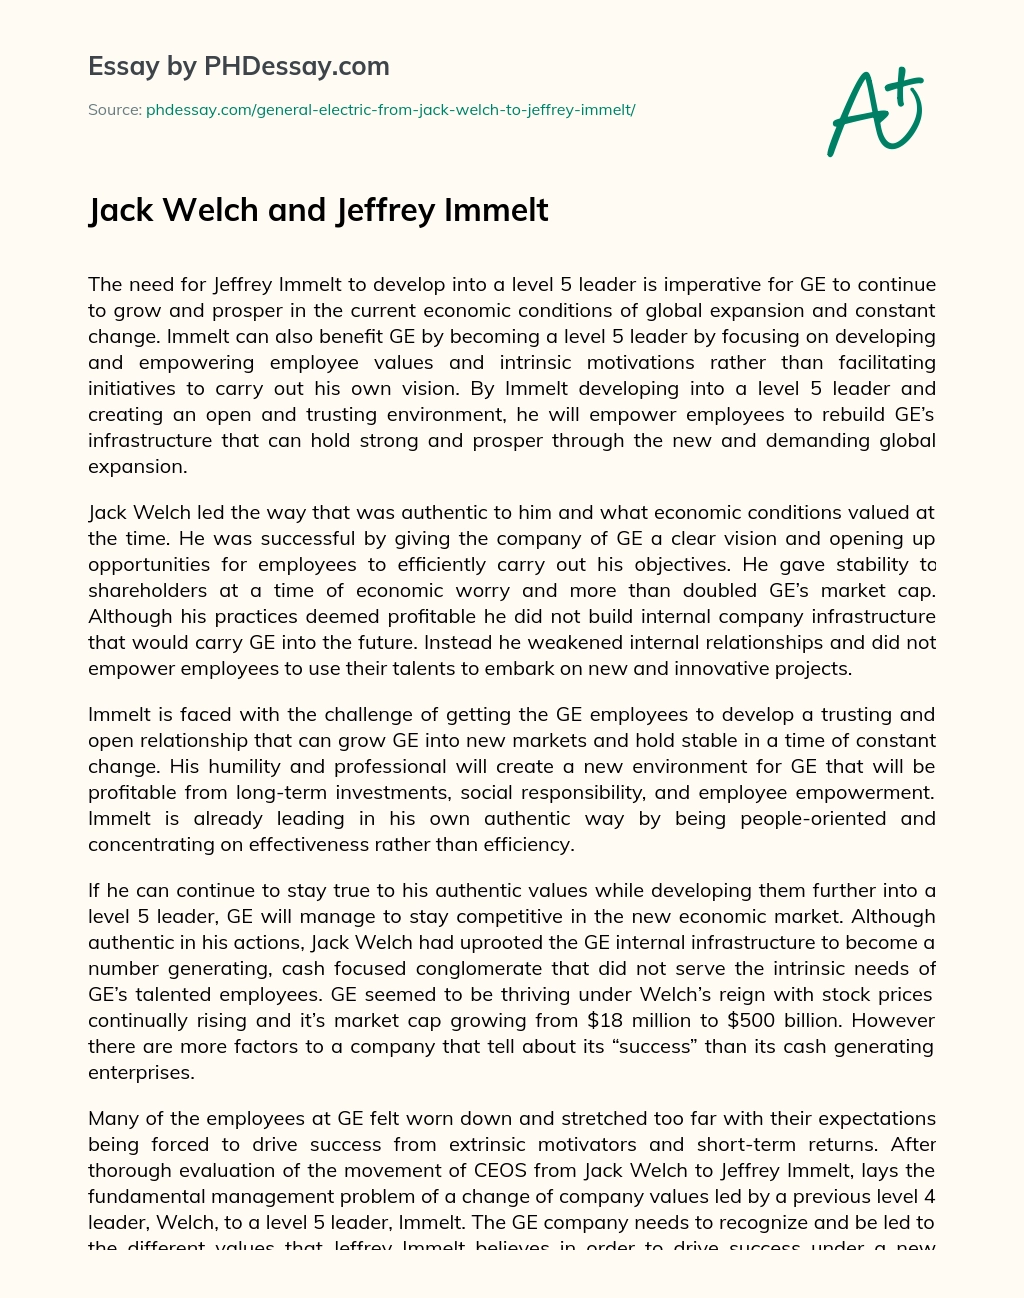 Jack Welch and Jeffrey Immelt essay